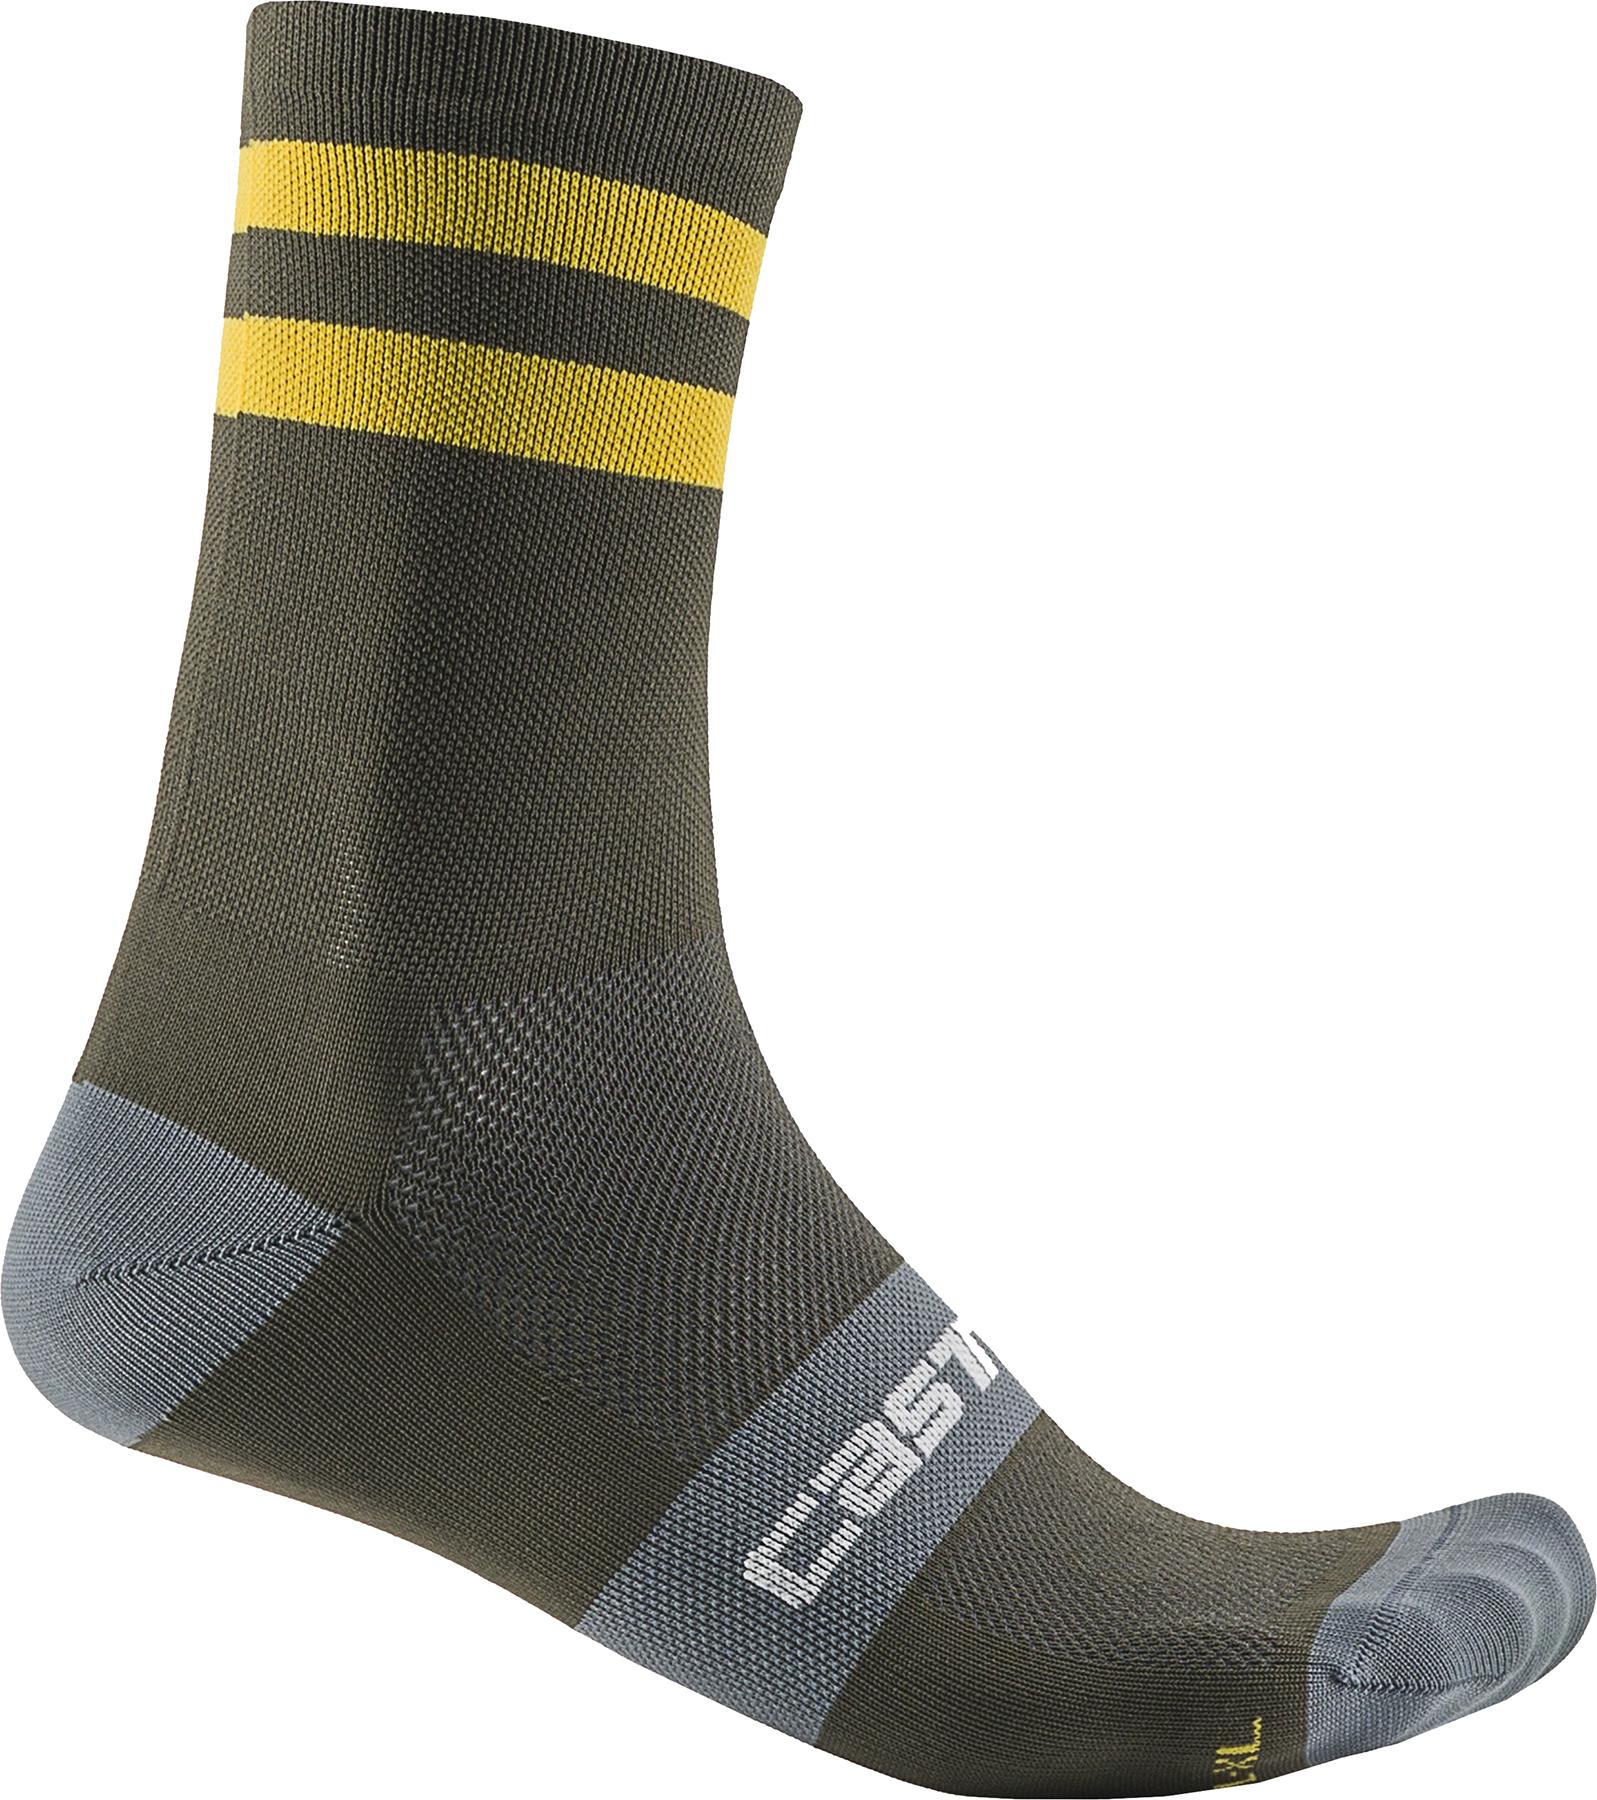 Castelli Velocissimo Kit Socks - Military/yellow